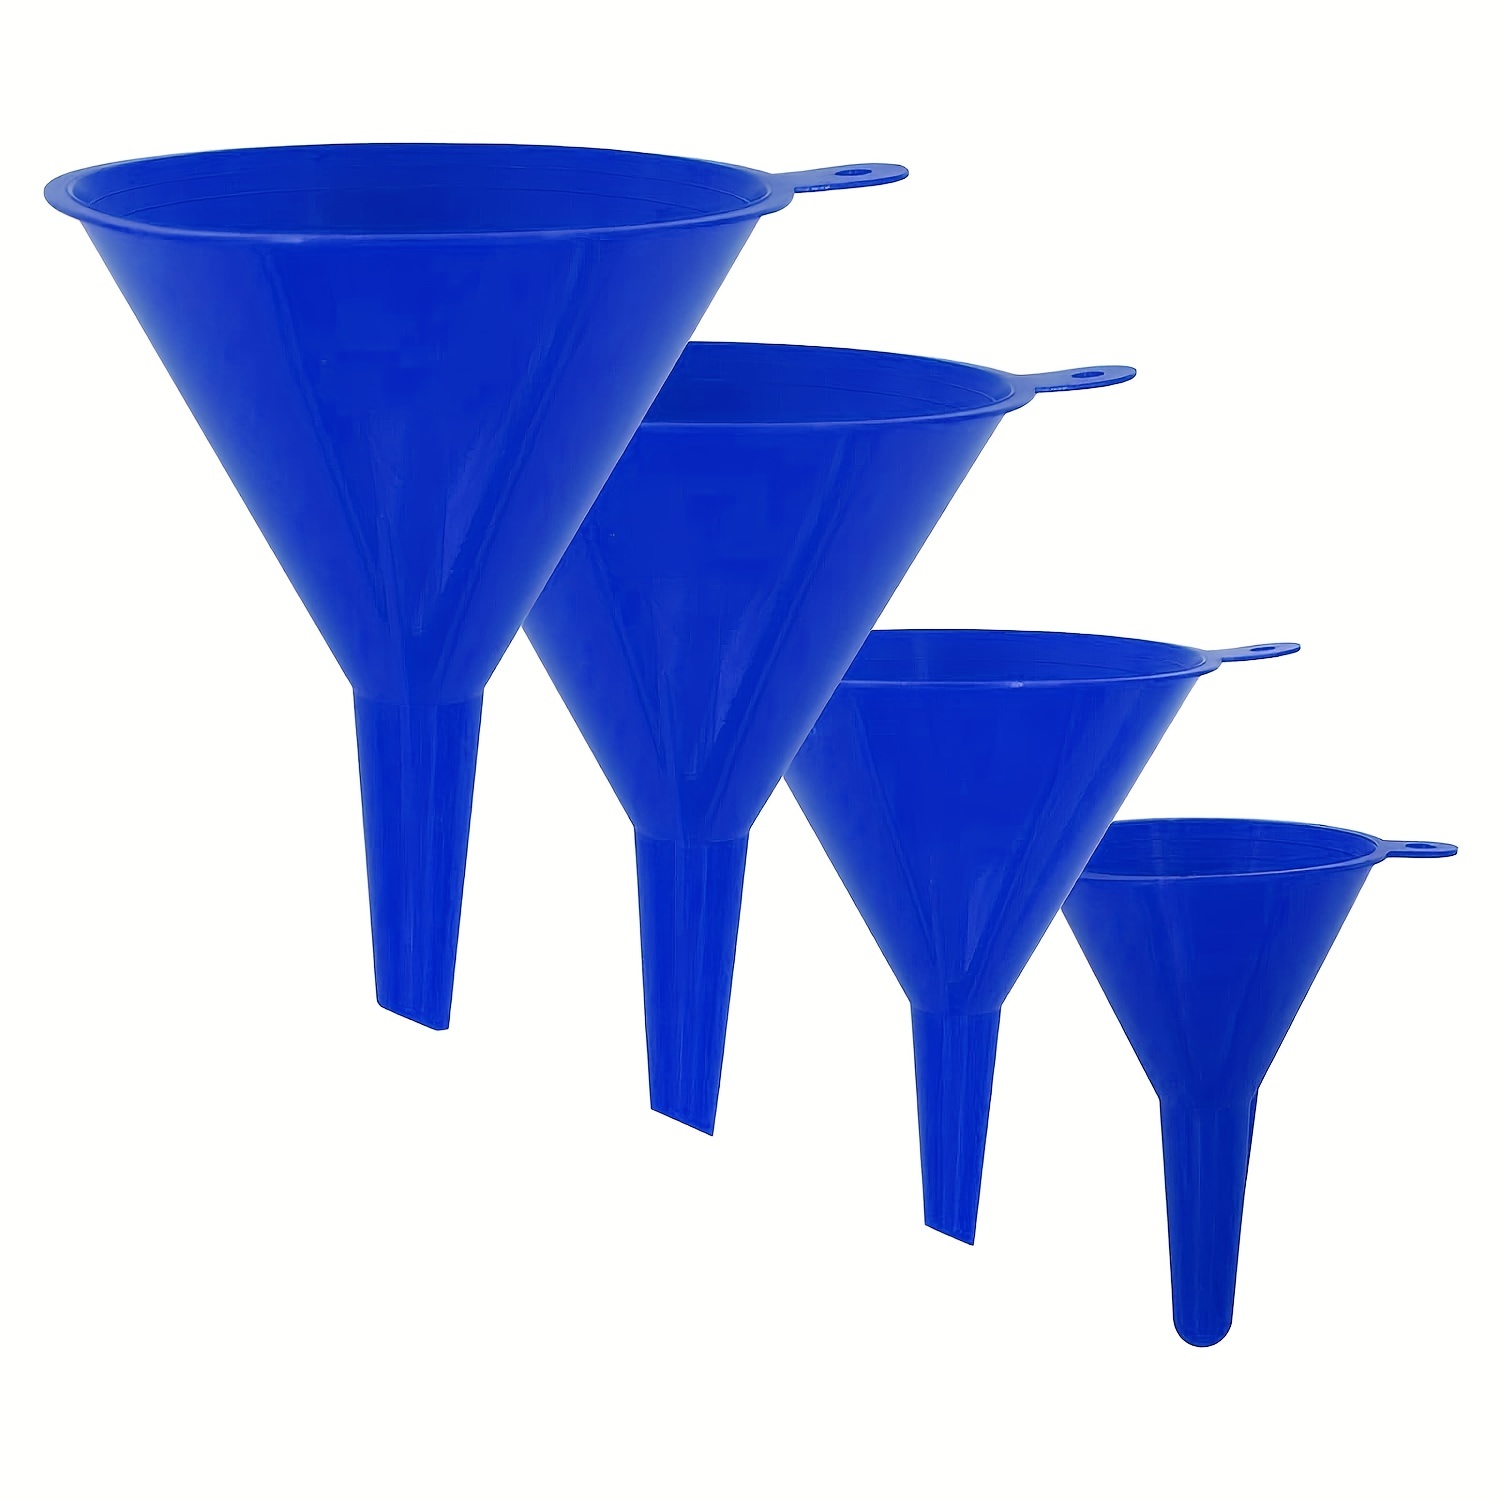 

4 Pieces Plastic Funnel Set For Automotive Use, Funnels For Filling Bottles, Lab Or Car Oil Funnels (white/blue/red)